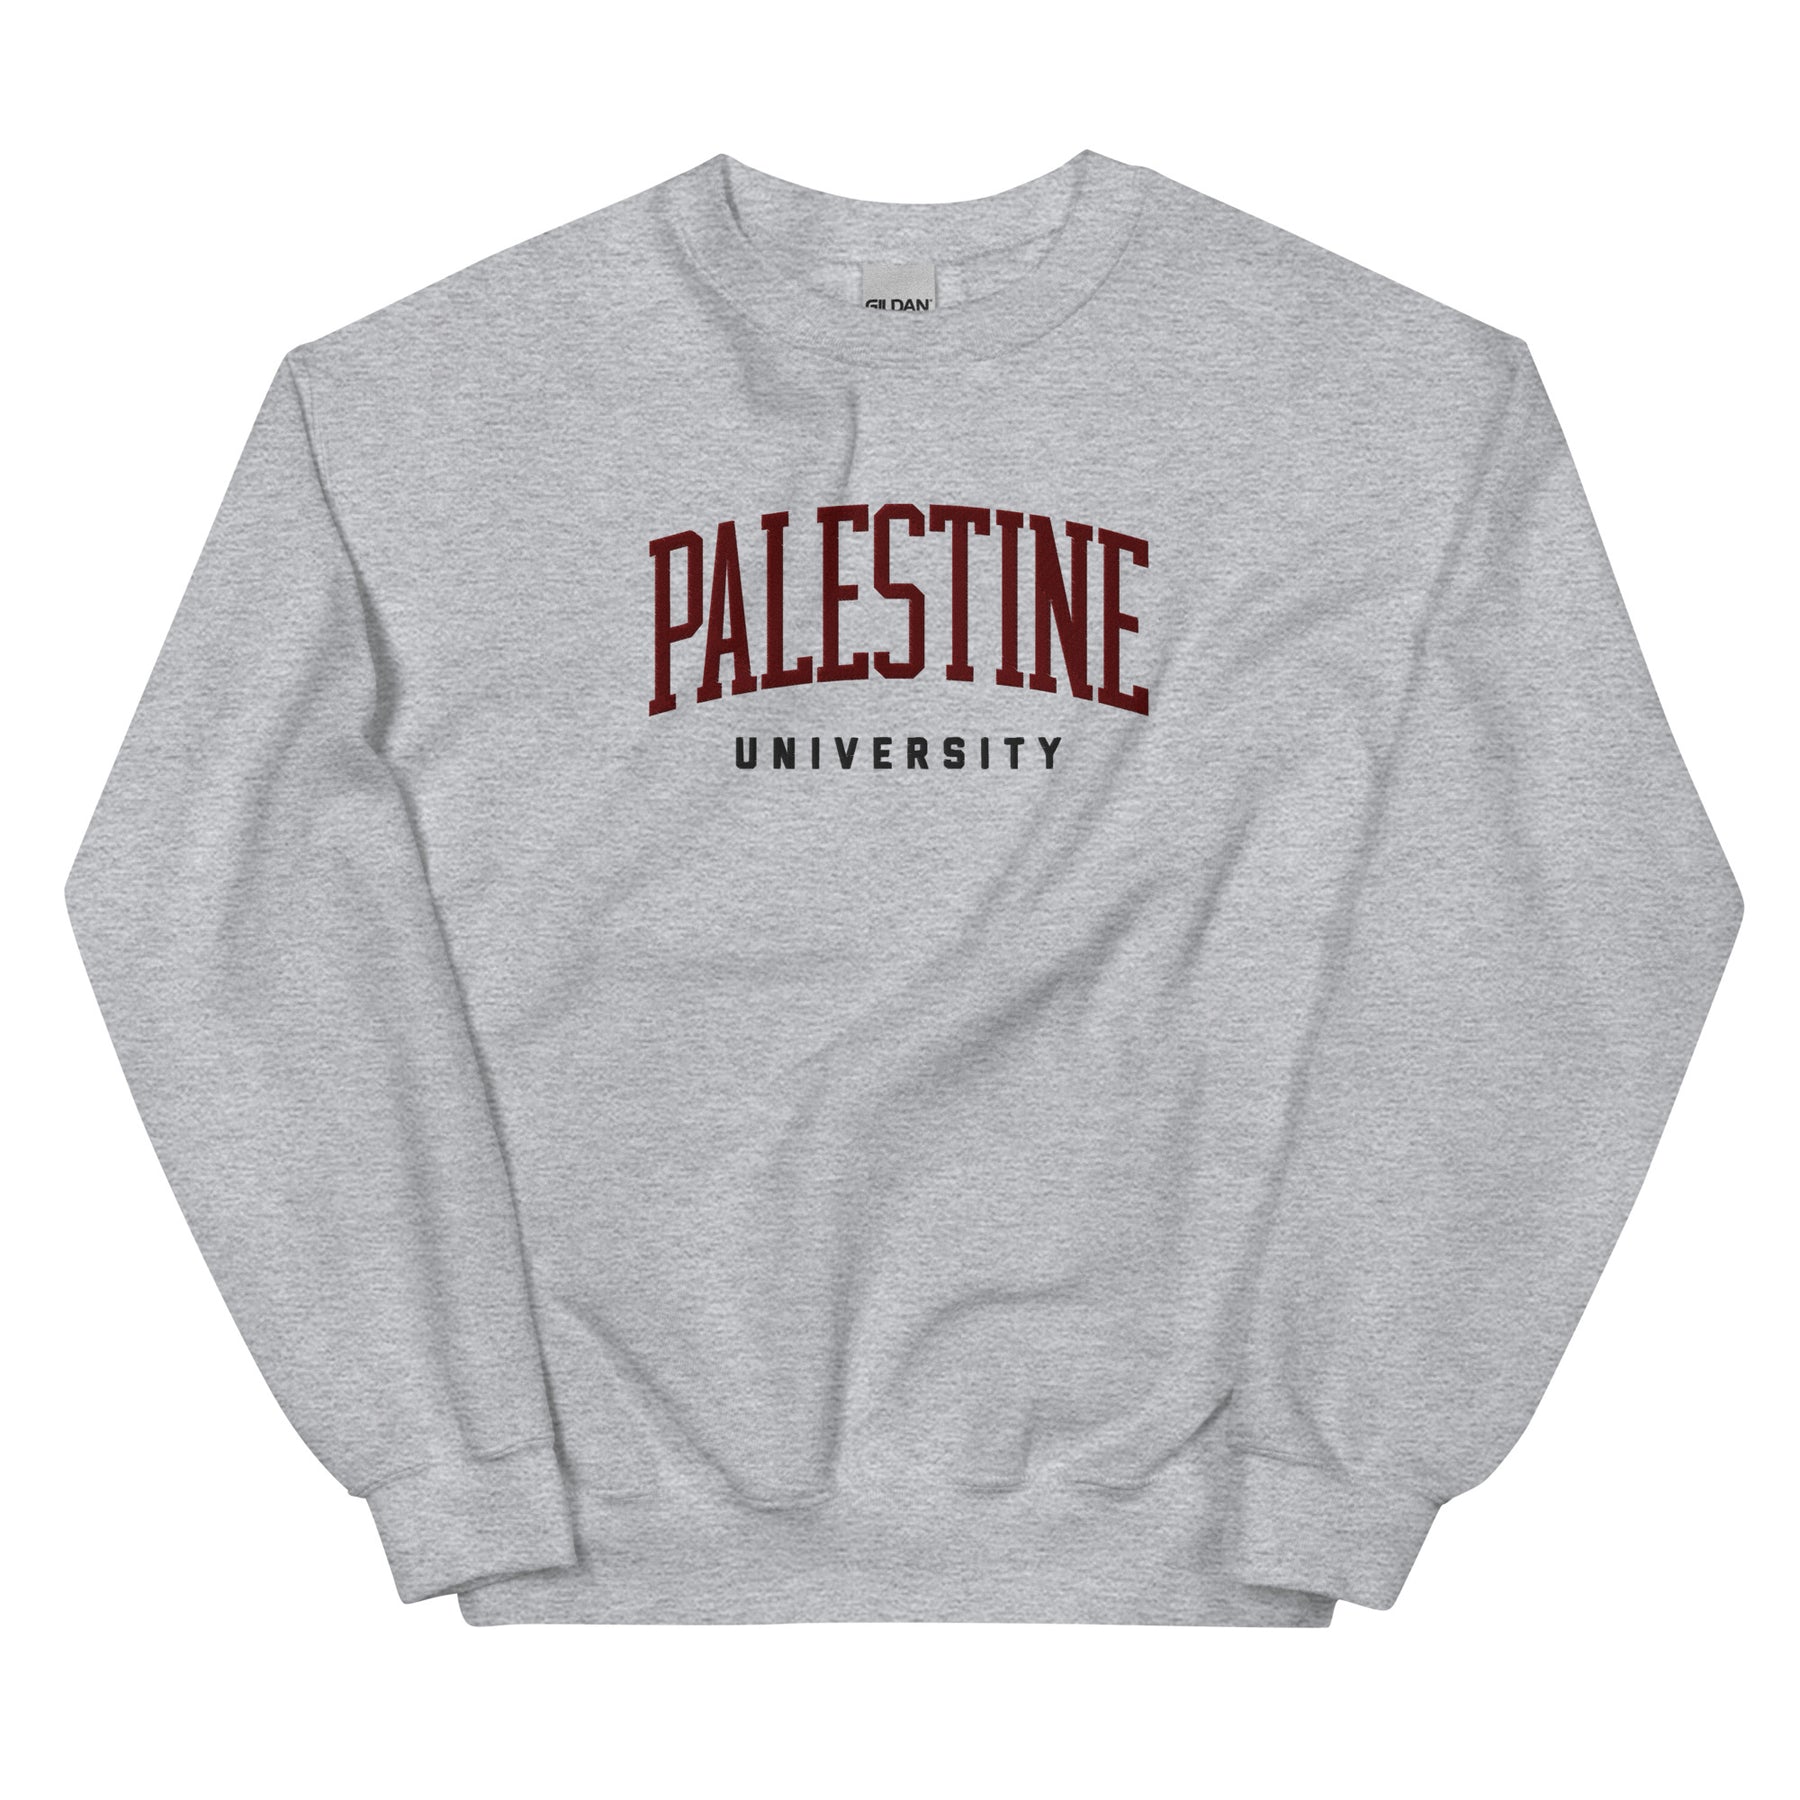 Palestine university sweatshirt in grey by Dar Collective